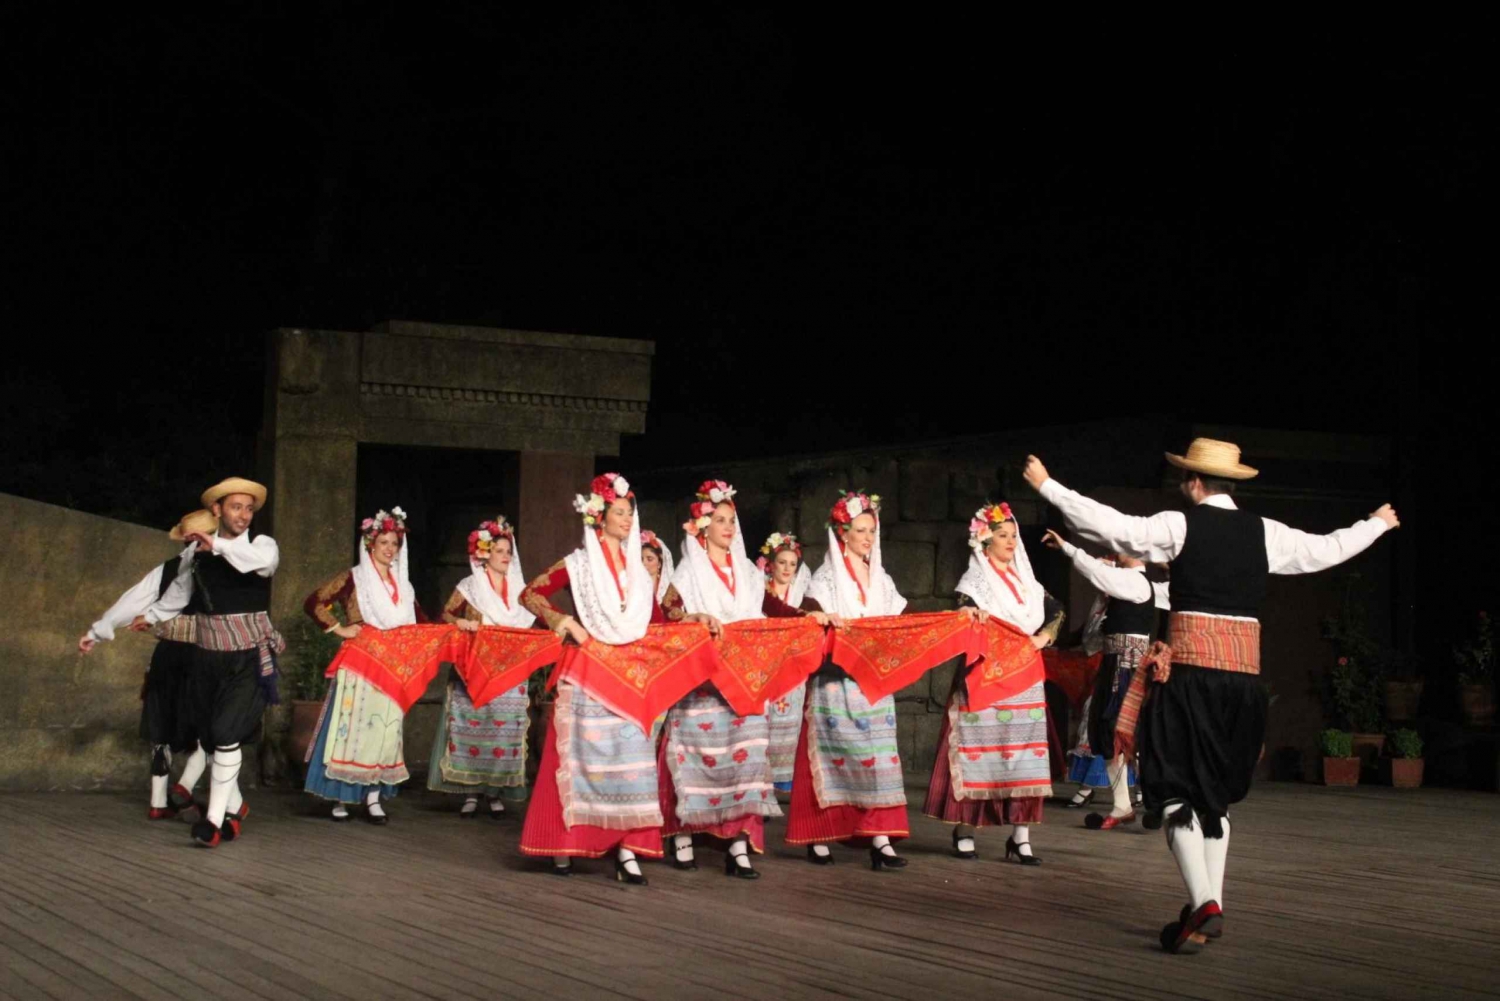 Ateny: Dora Stratou Greek Dancing Show Experience